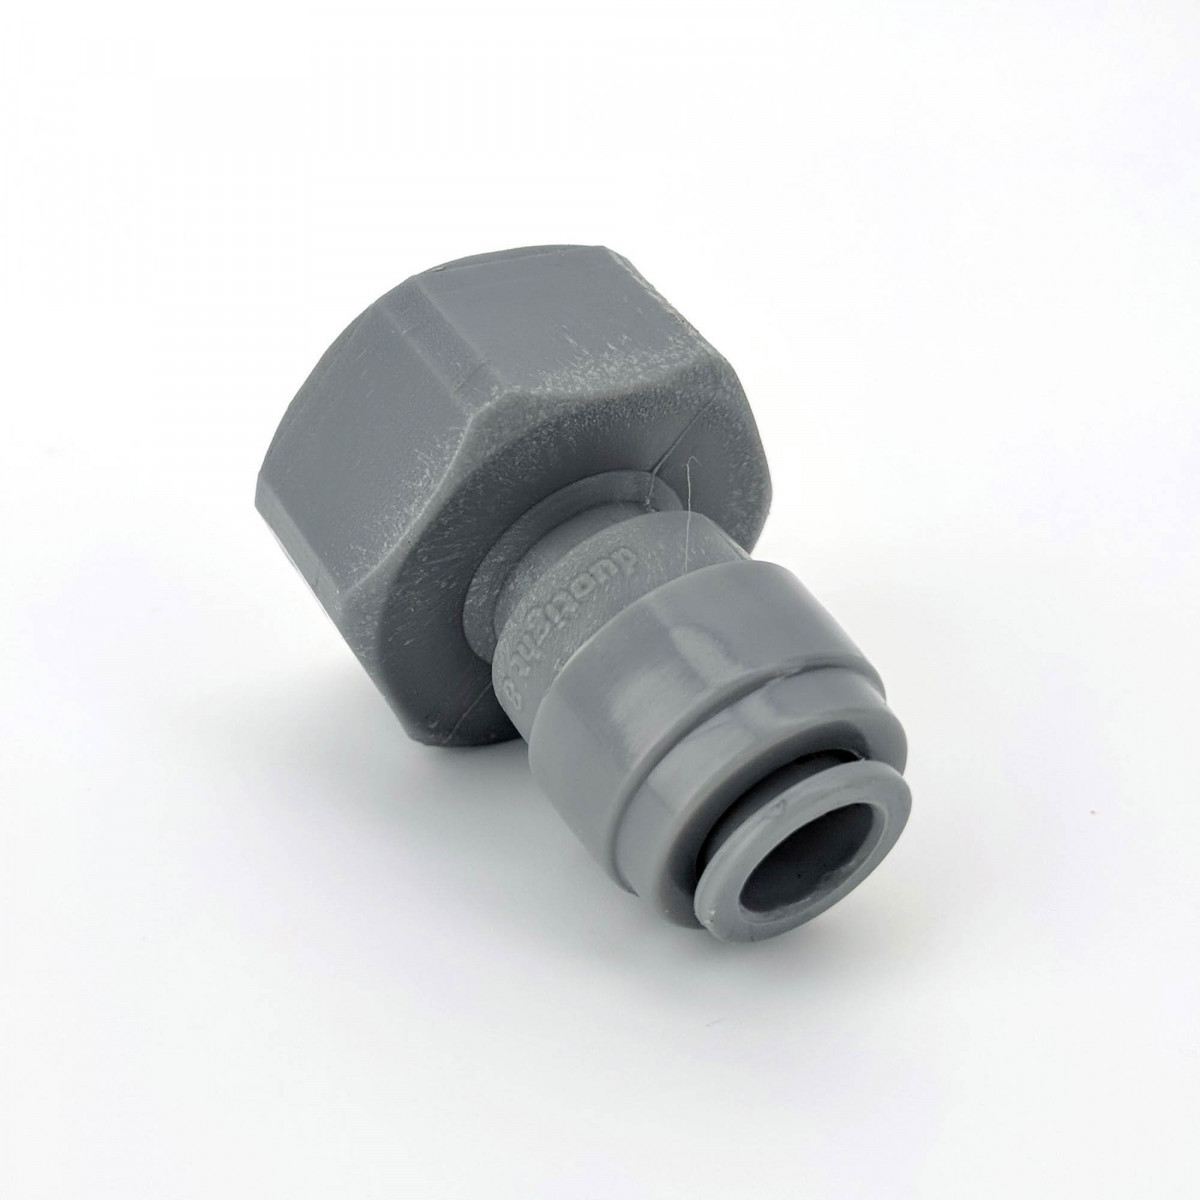 Duotight verbindingsstuk 8 mm (5/16”) push-in koppeling naar 5/8” binnendraad